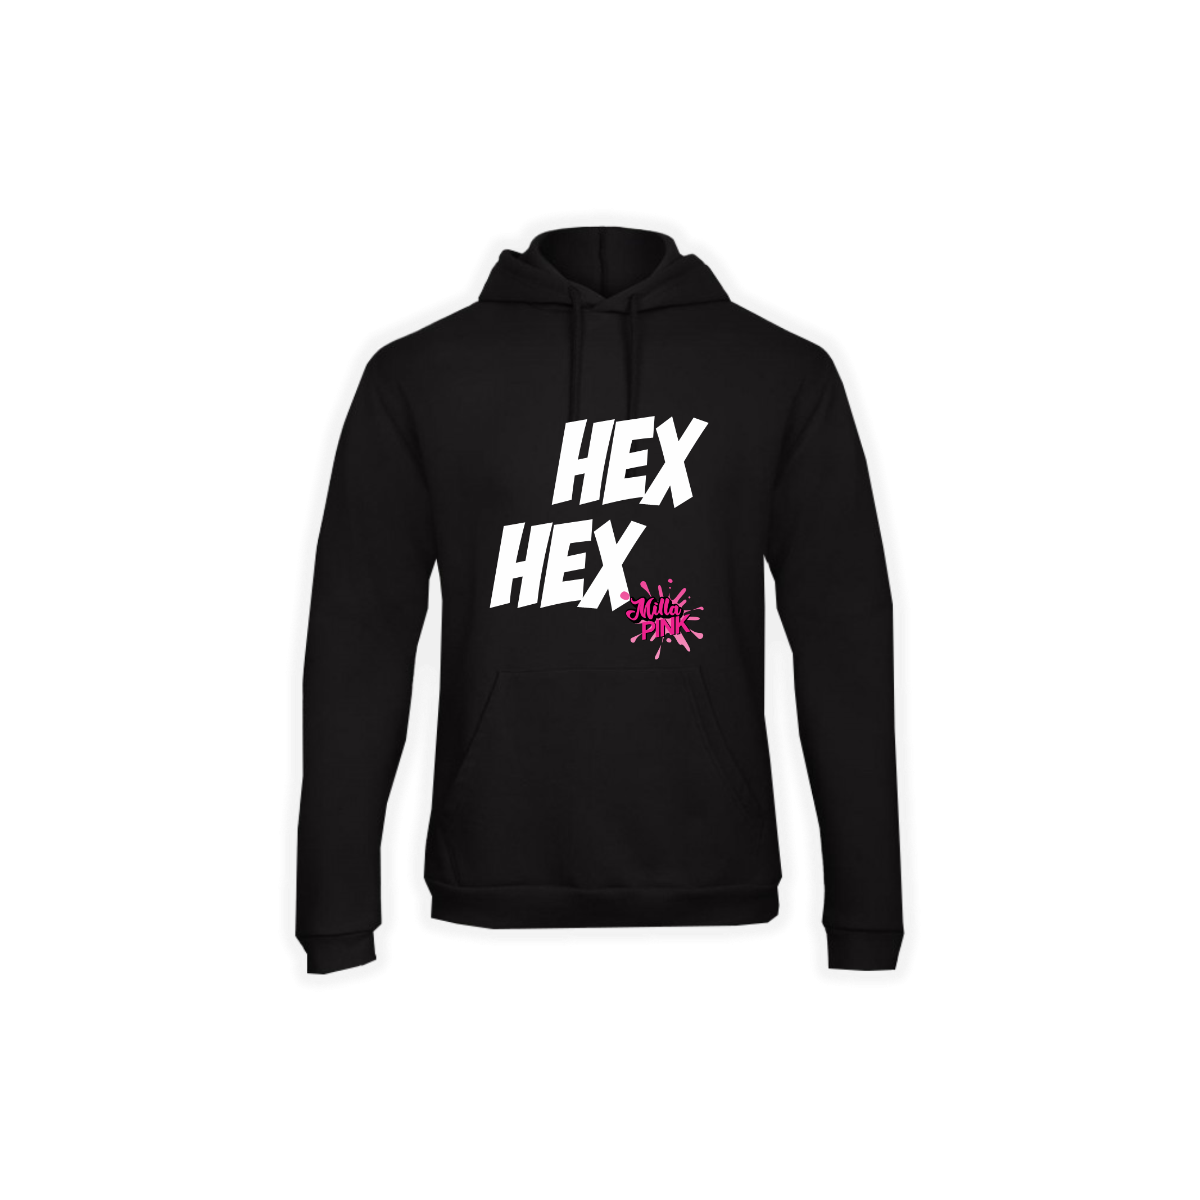 Kapuzen Sweat-Shirt "HEX HEX" schwarz